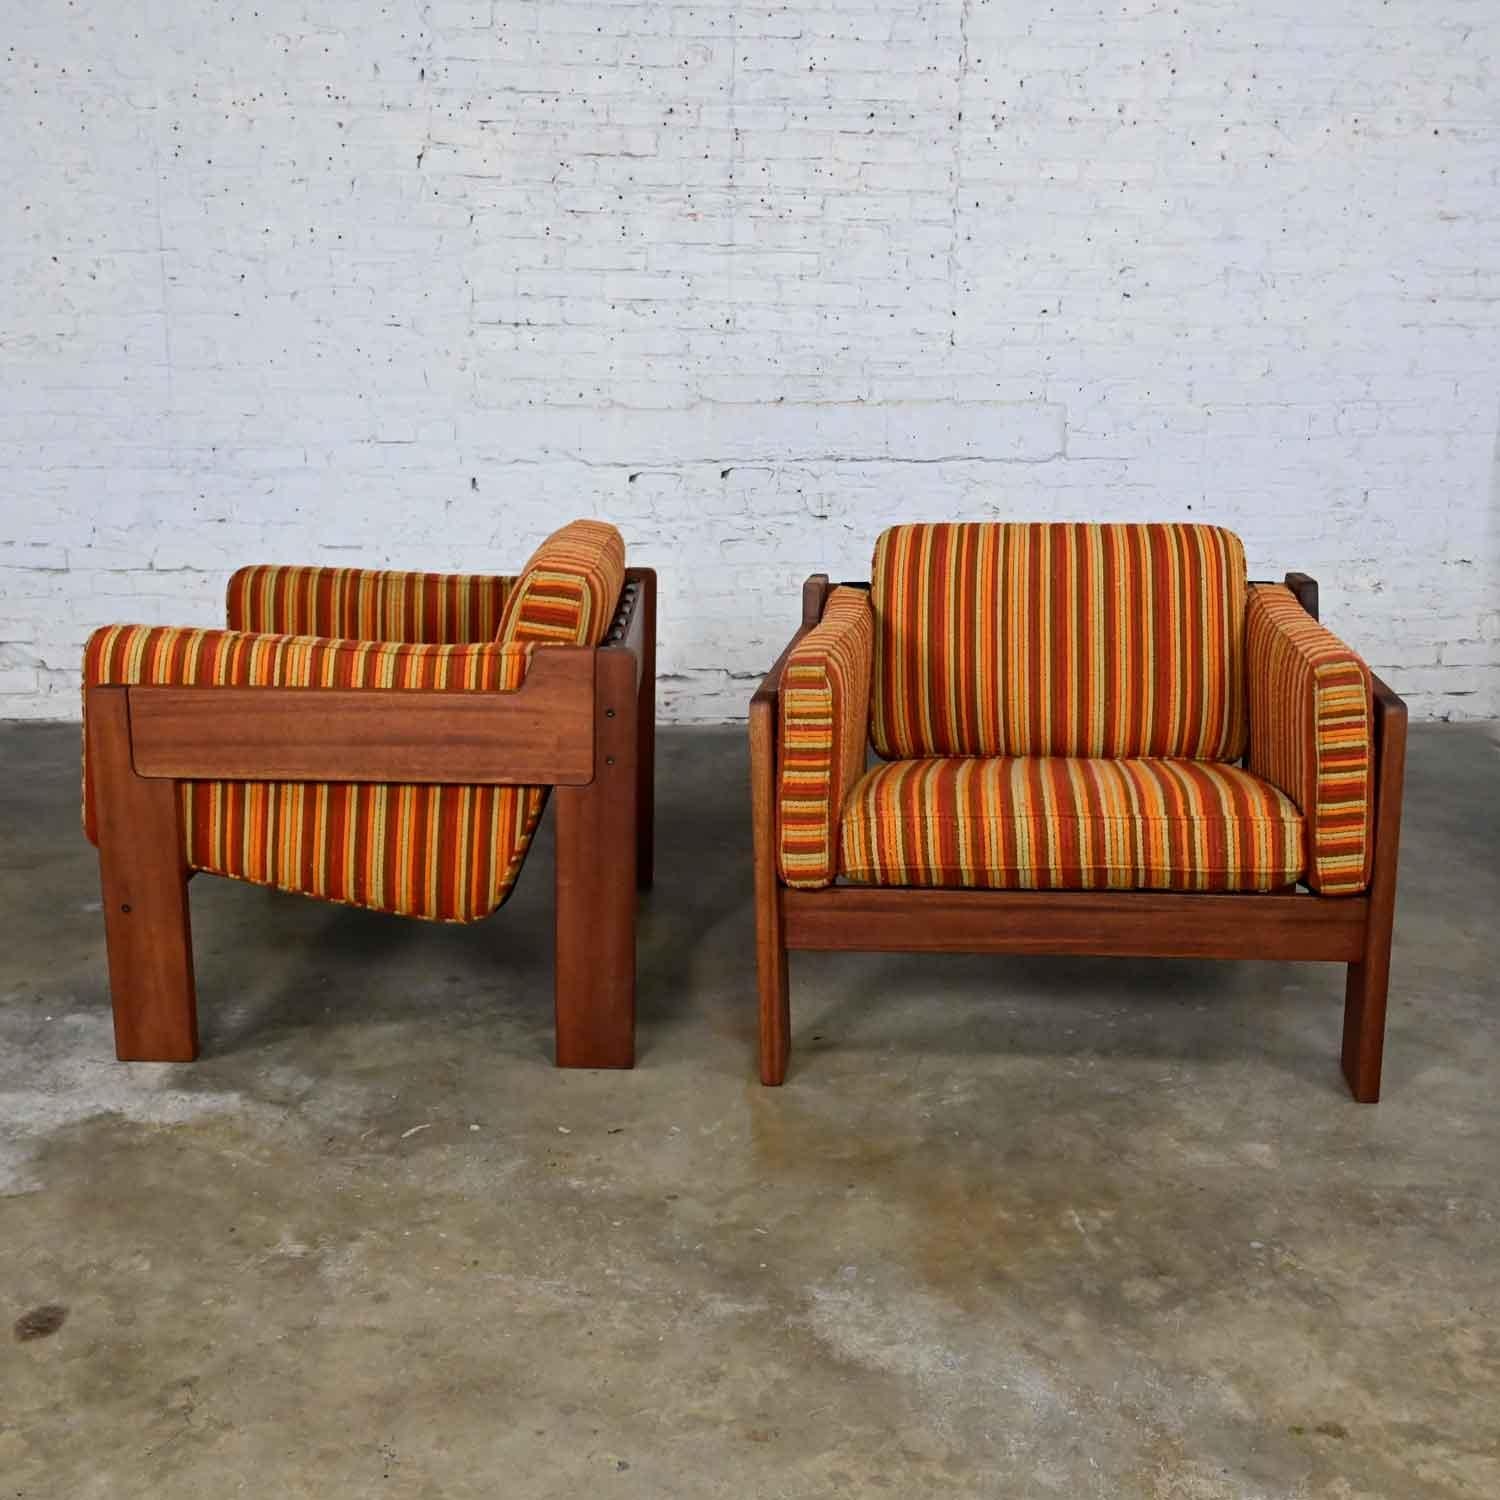 20th Century MCM to Modern Teak Orange Striped Club Chairs Style Tobia Scarpa or Lou Hodges